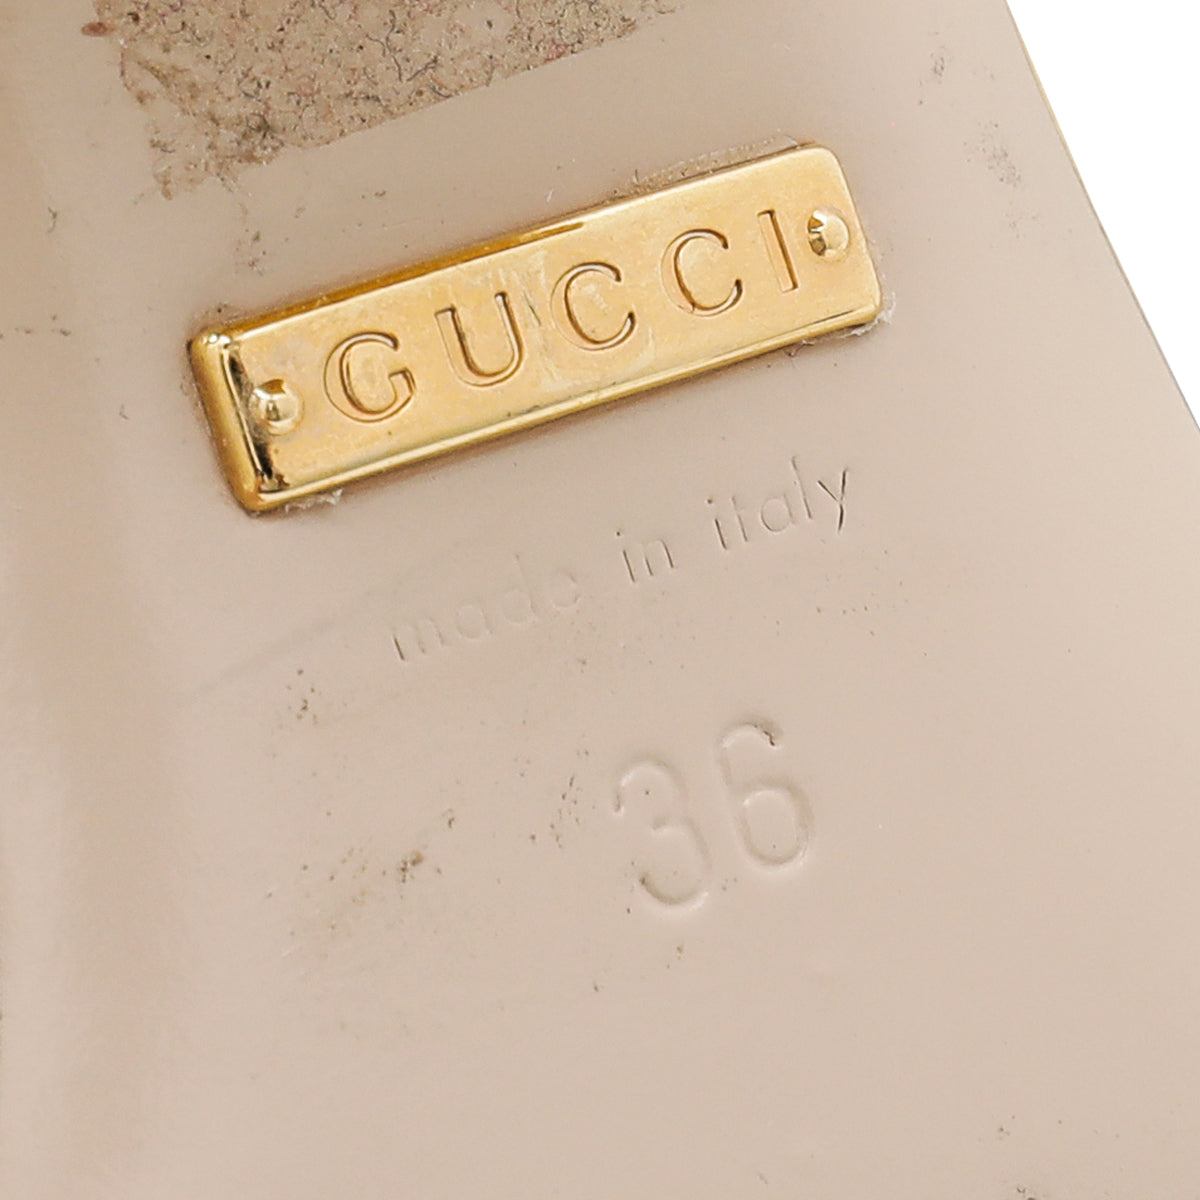 Gucci Yellow GG Marmont Mid-Heel Pump 36